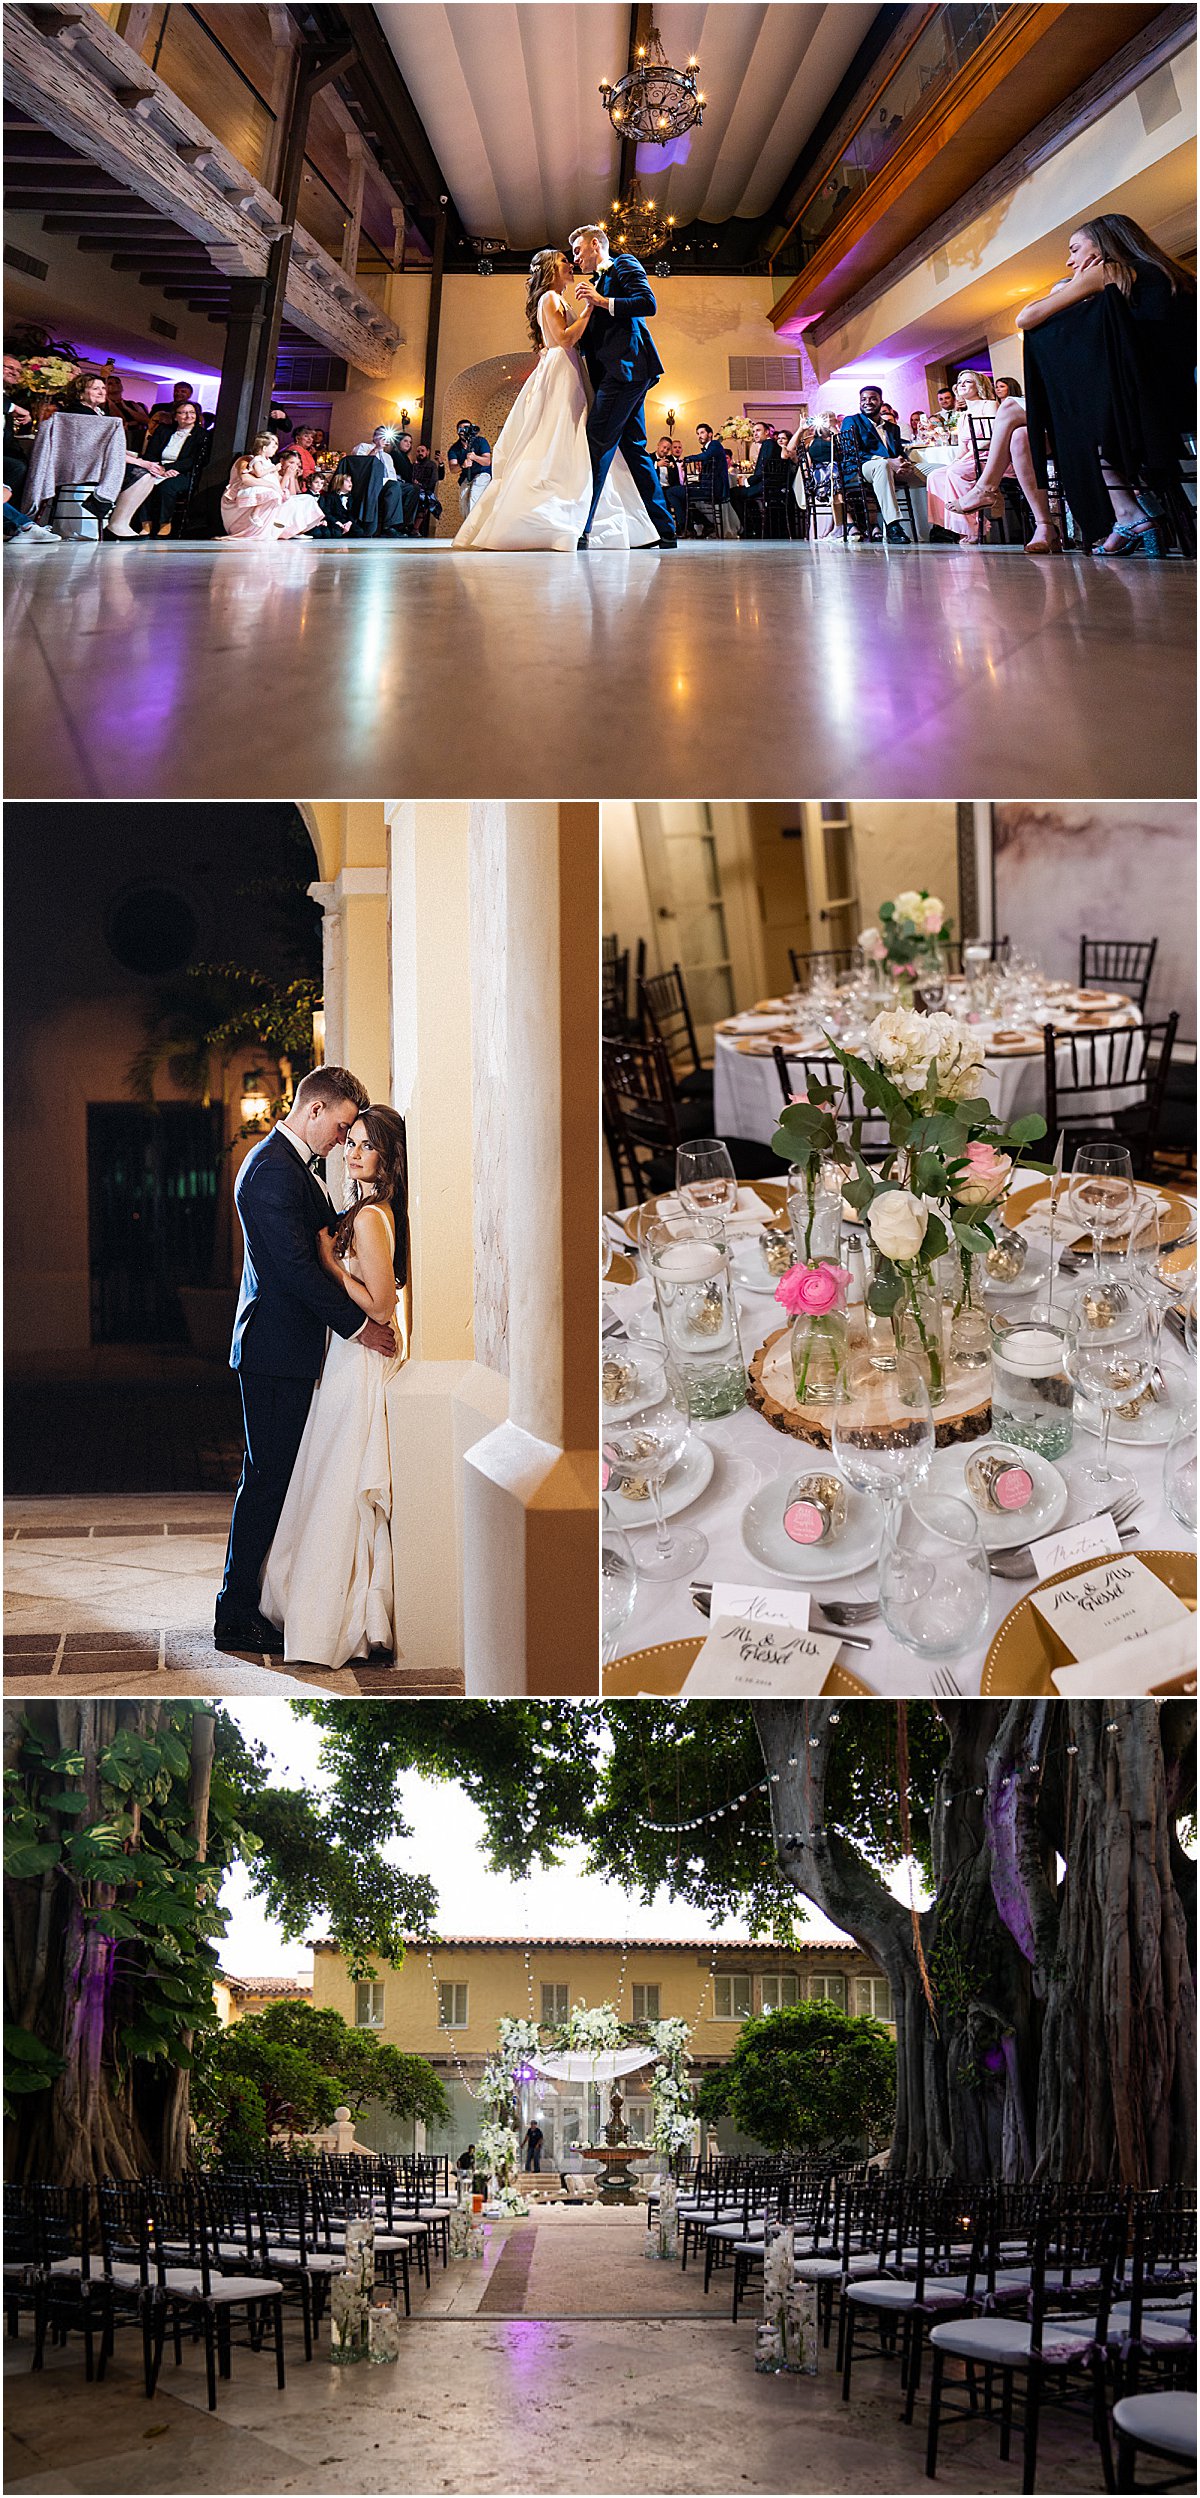 Addison Boca Raton | Top Palm Beach Wedding Venue | Married in Palm Beach | www.marriedinpalmbeach.com | Organic Moments Photography